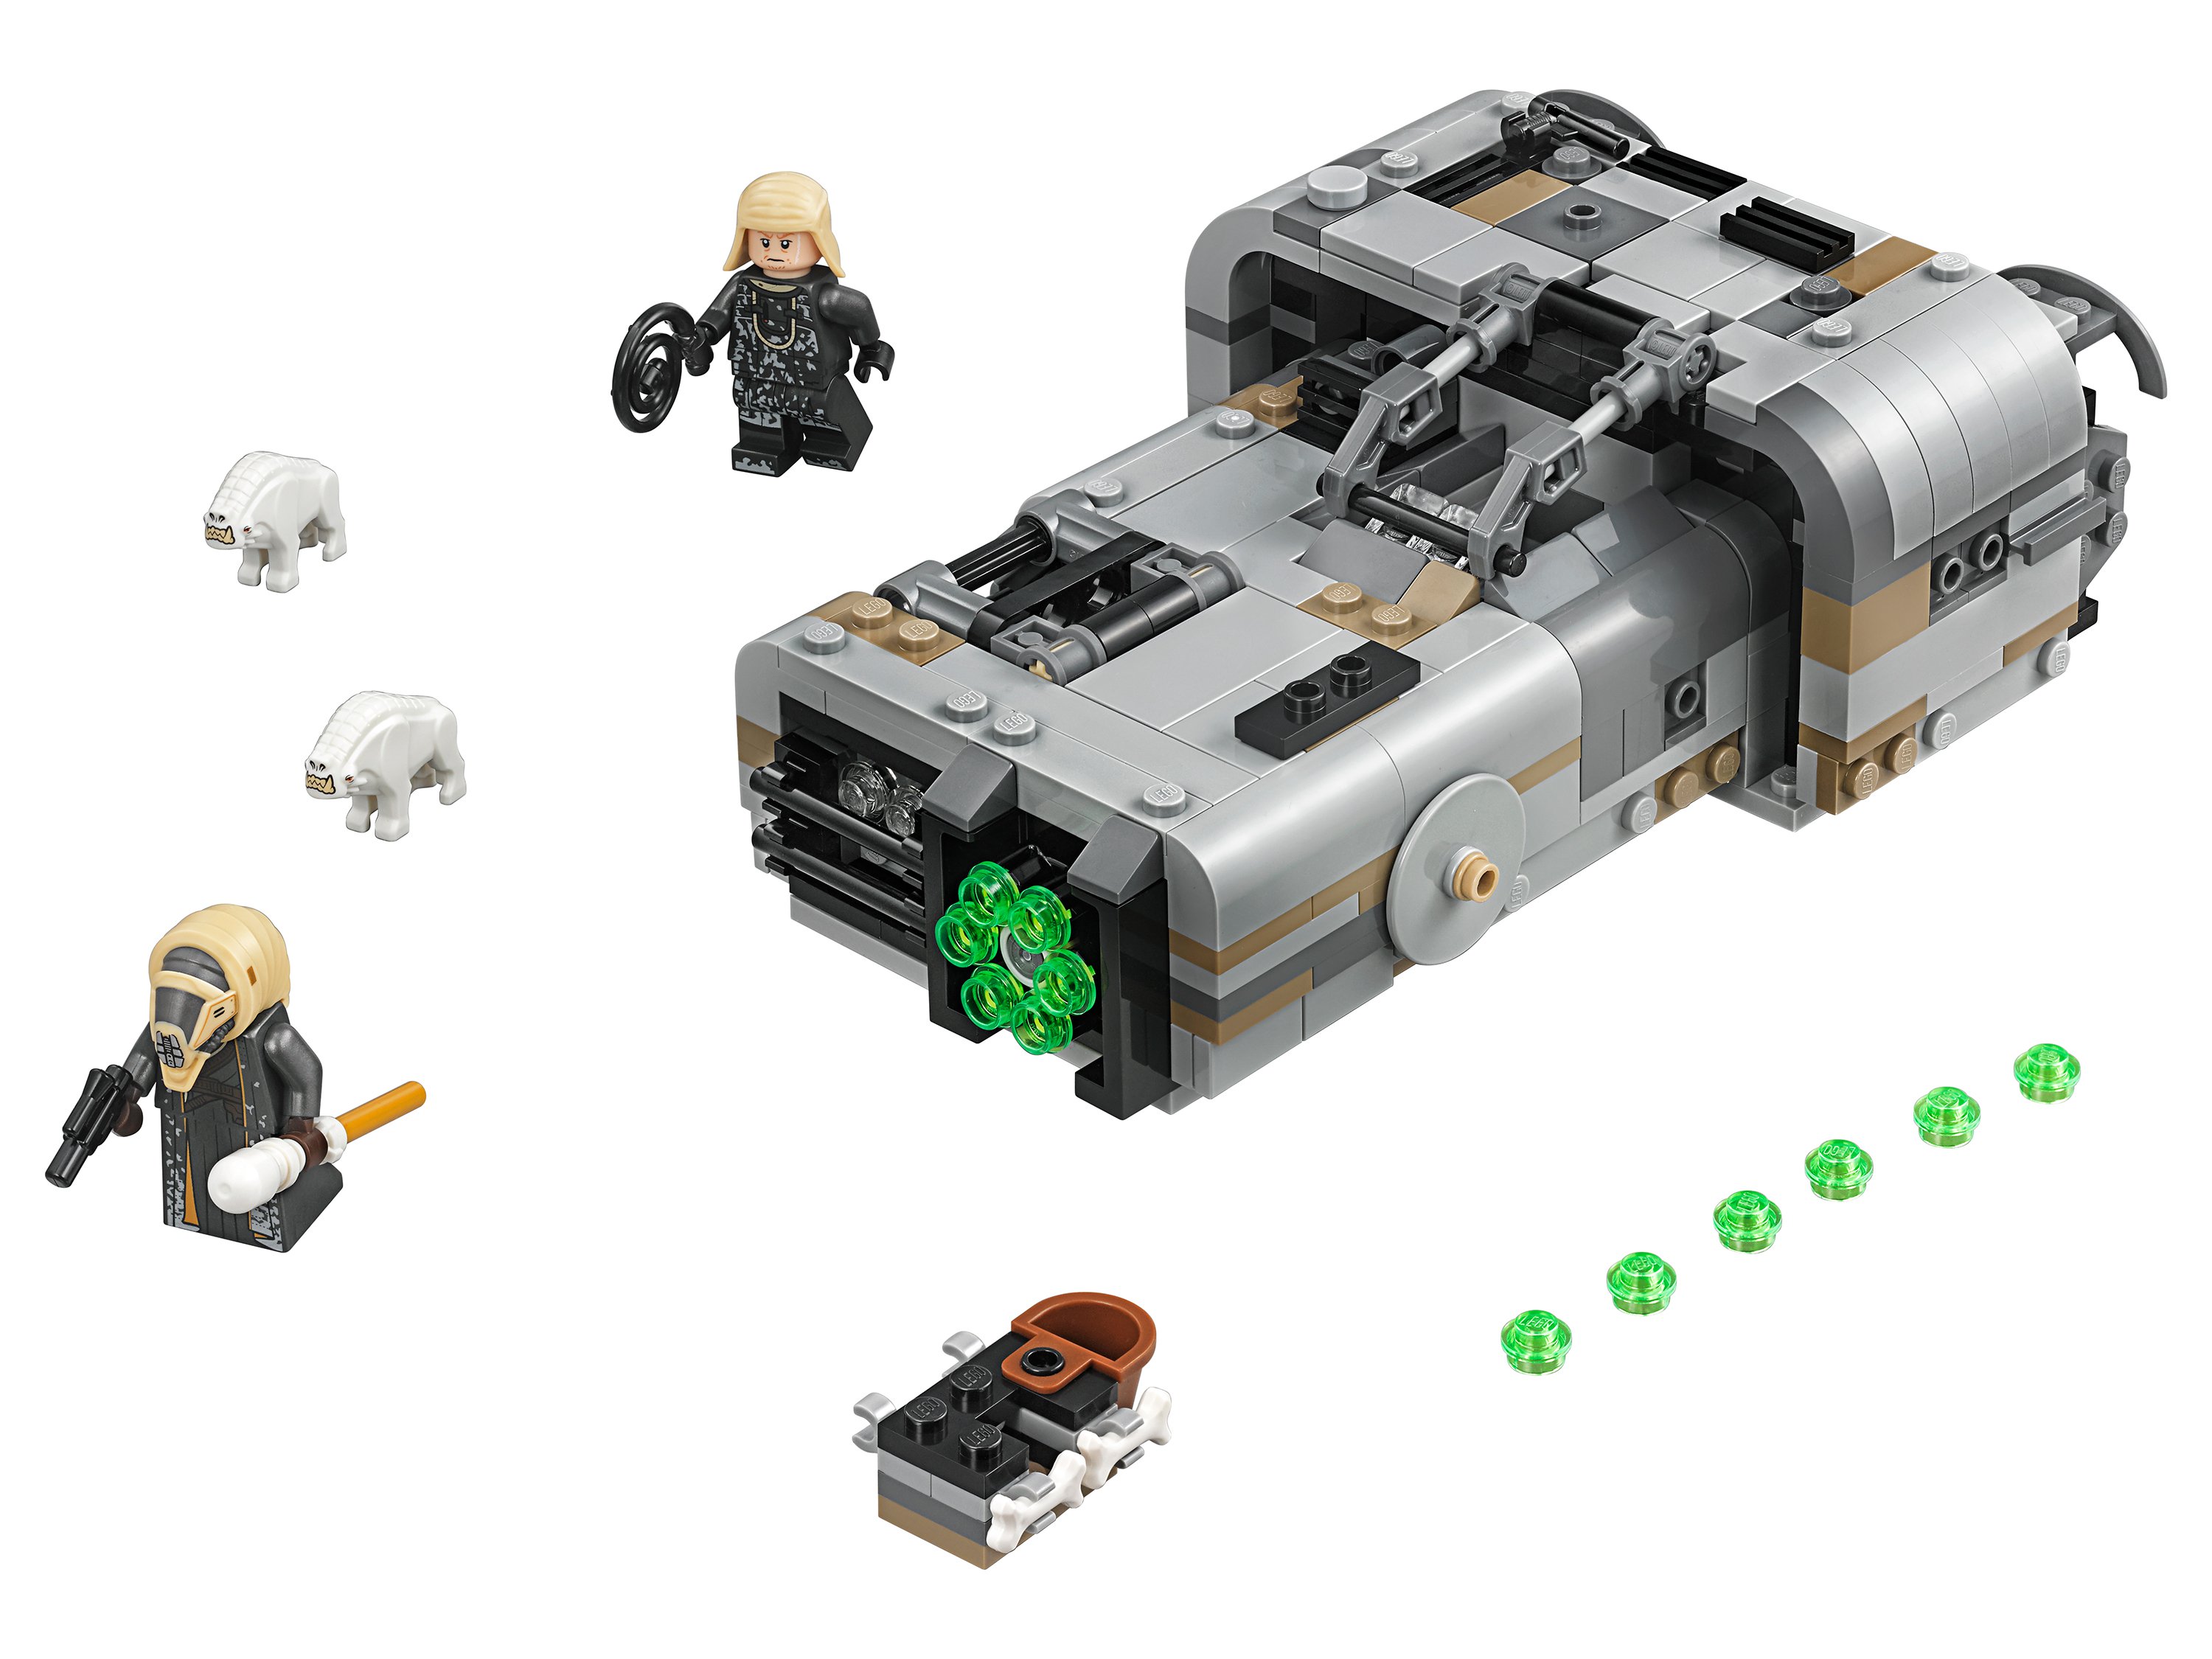 Конструктор LEGO 75210 Star Wars Спидер Молоха